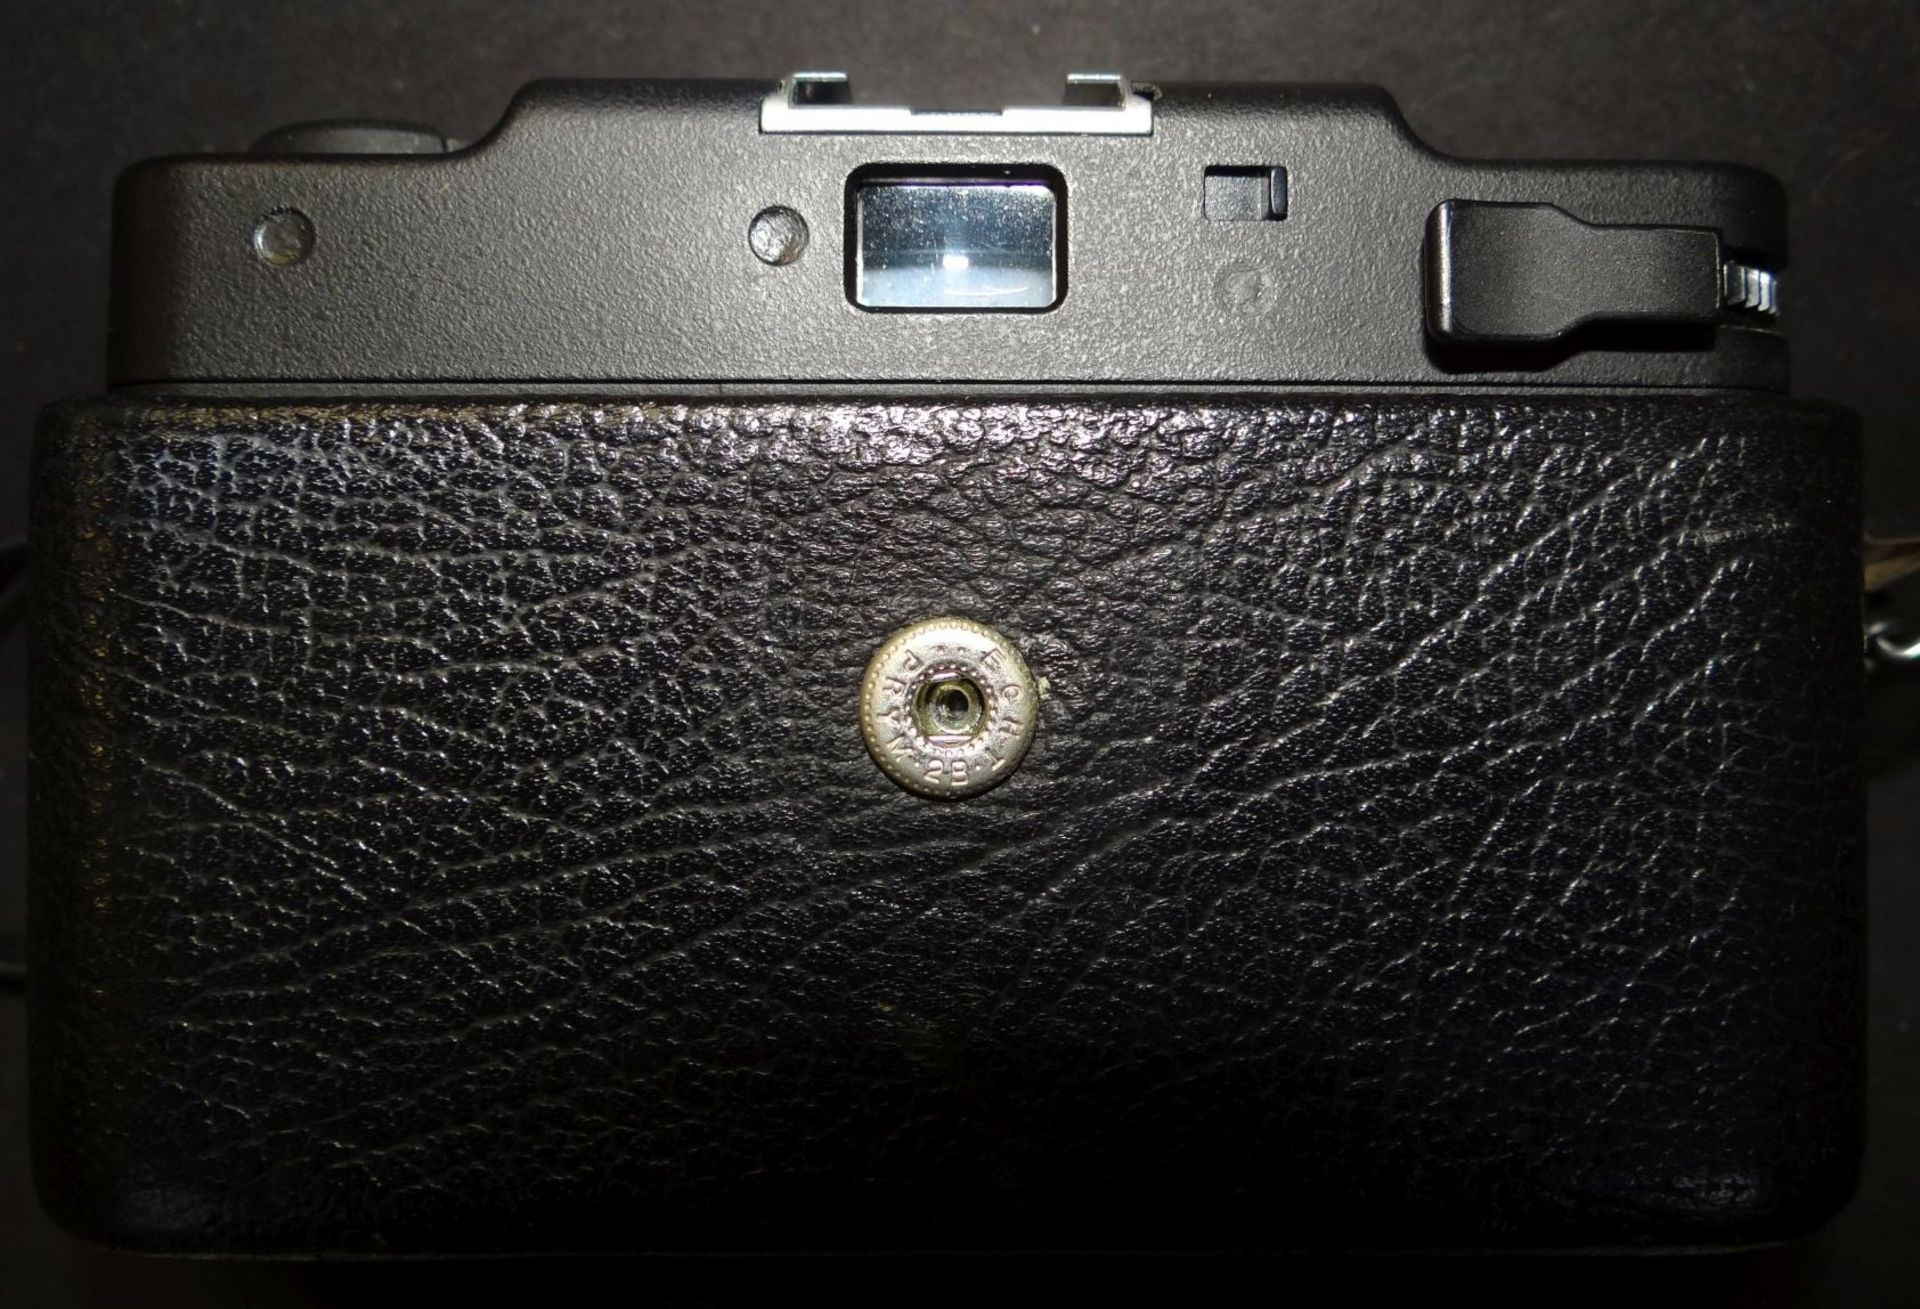 Fotoapparat "Minox 35 MB" in Tasche - Bild 3 aus 3